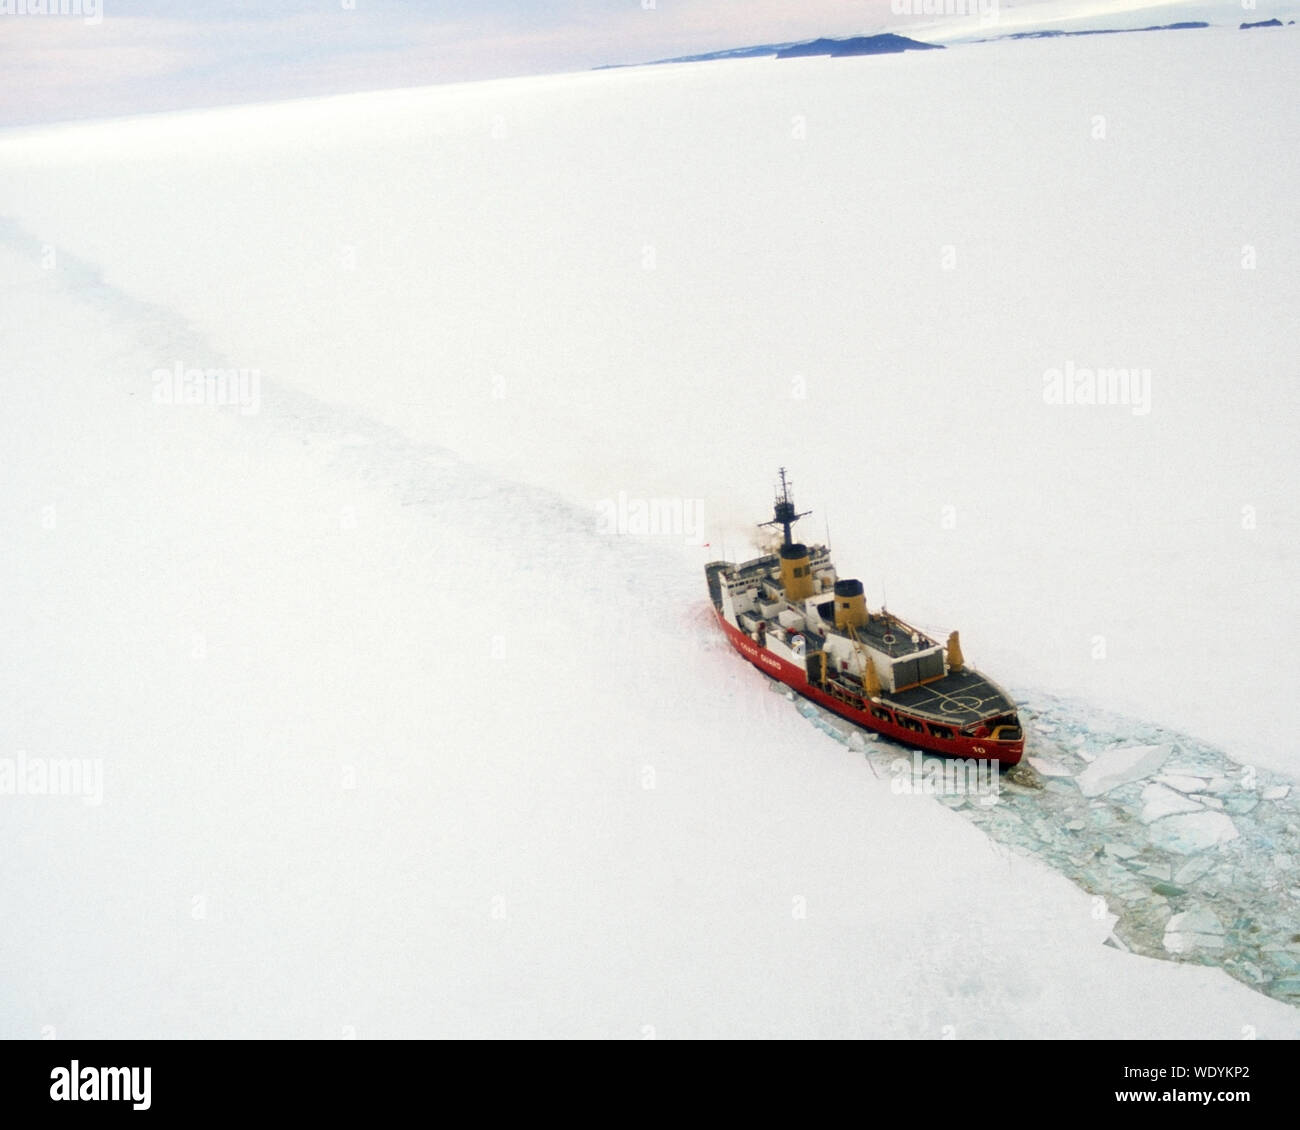 Polar Star Icebreaker, ice breaker, U.S. Coast Guard ship breaking ice in Ross Sea, Antarctica. Stock Photo